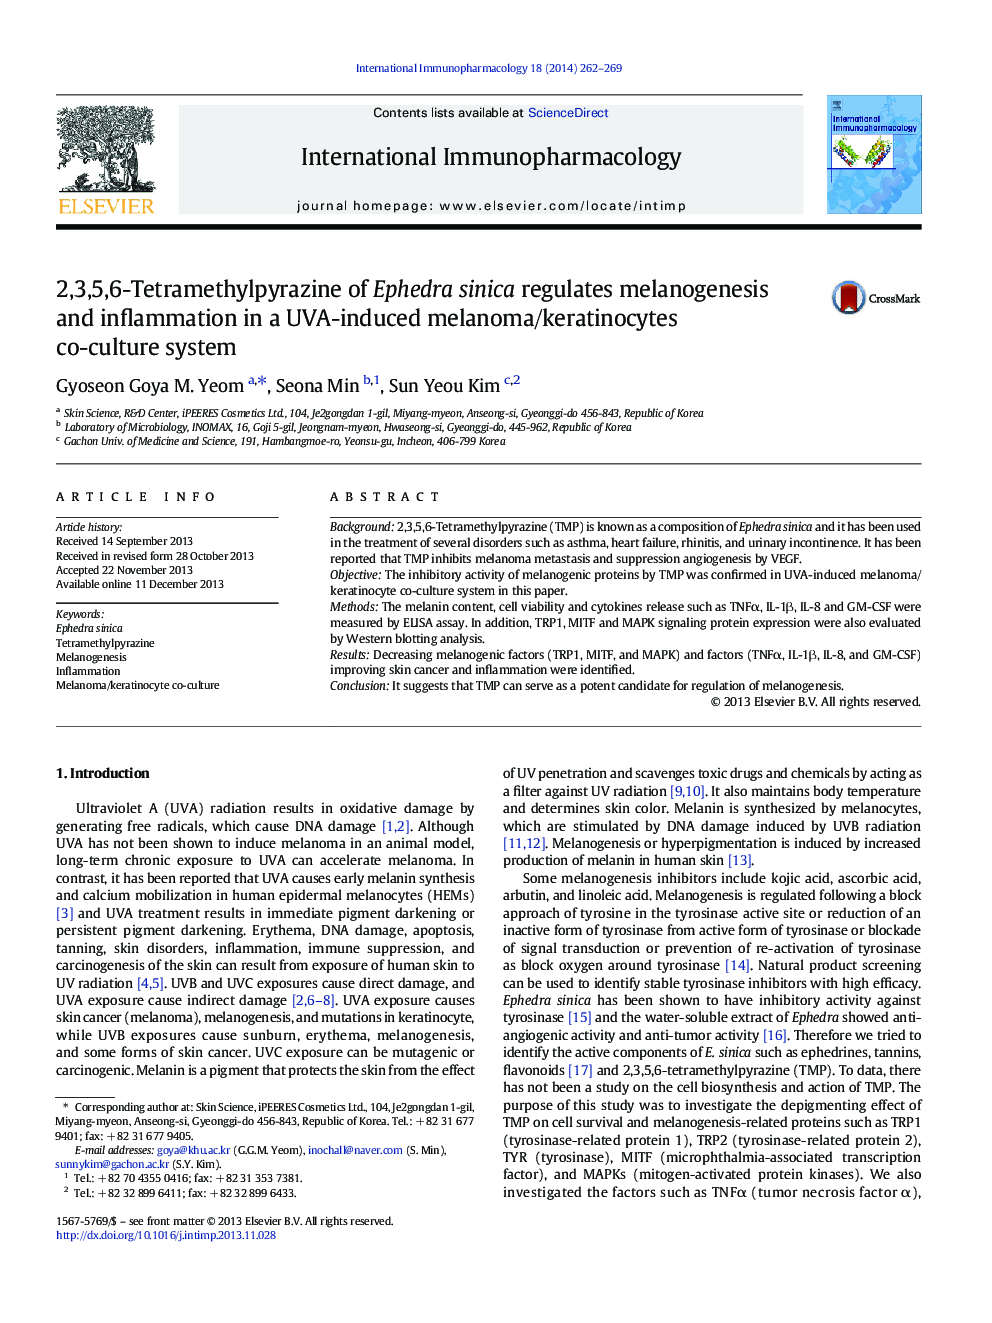 2,3,5,6-Tetramethylpyrazine of Ephedra sinica regulates melanogenesis and inflammation in a UVA-induced melanoma/keratinocytes co-culture system